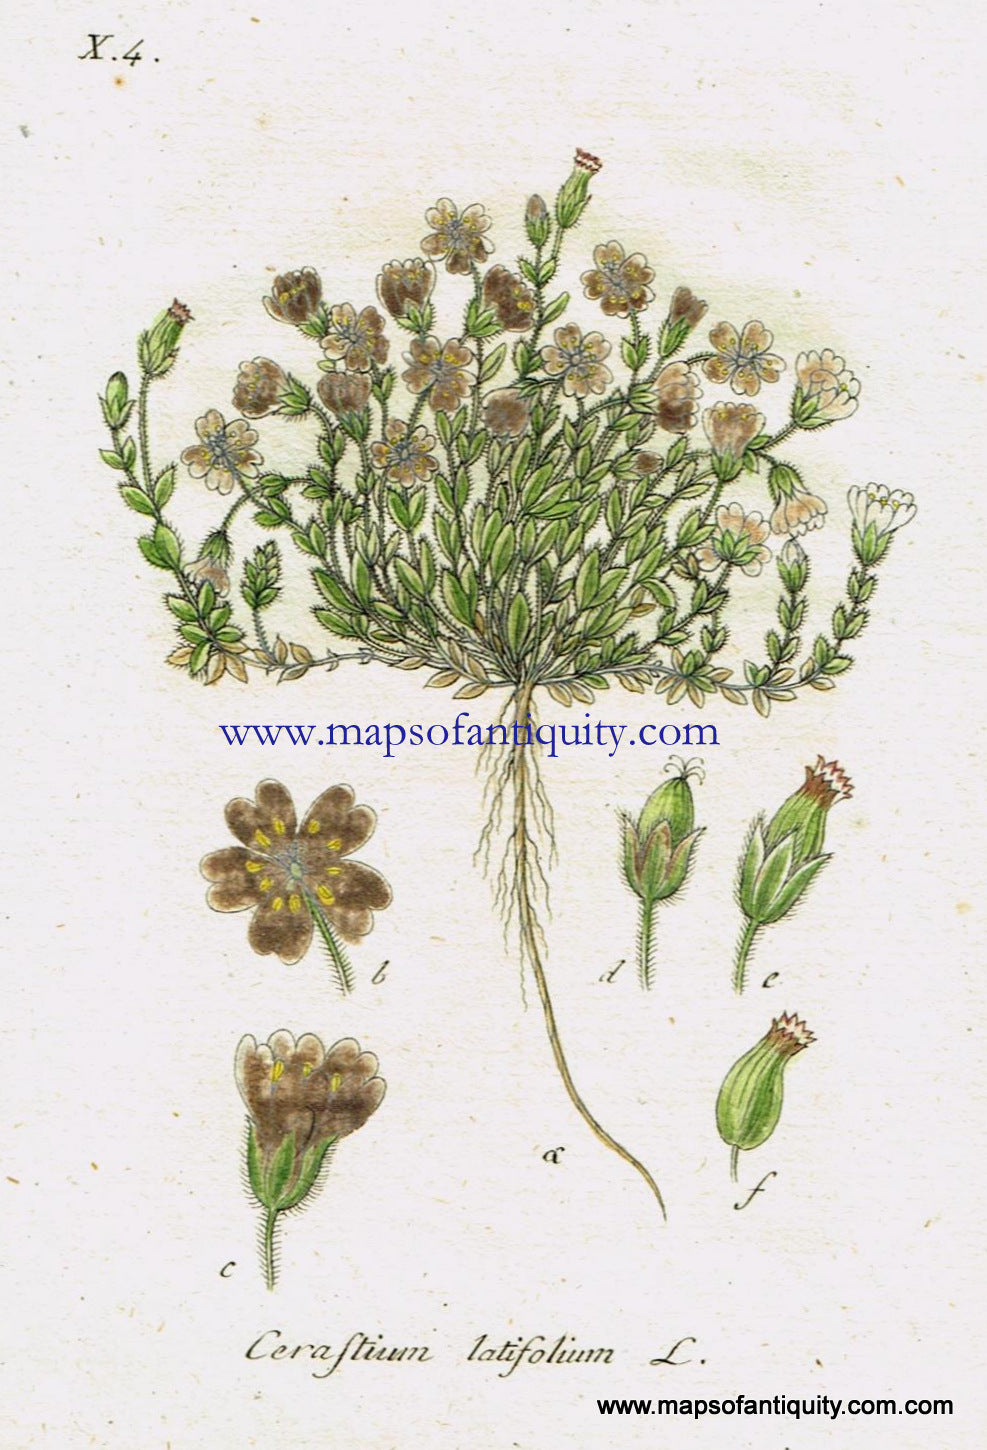 Antique-Hand-Colored-Botanical-Print-Cerastium-latifolium-L.-or-alpine-chickweed-Antique-Prints--Natural-History-Botanical-1808-Jacob-Sturm-Maps-Of-Antiquity